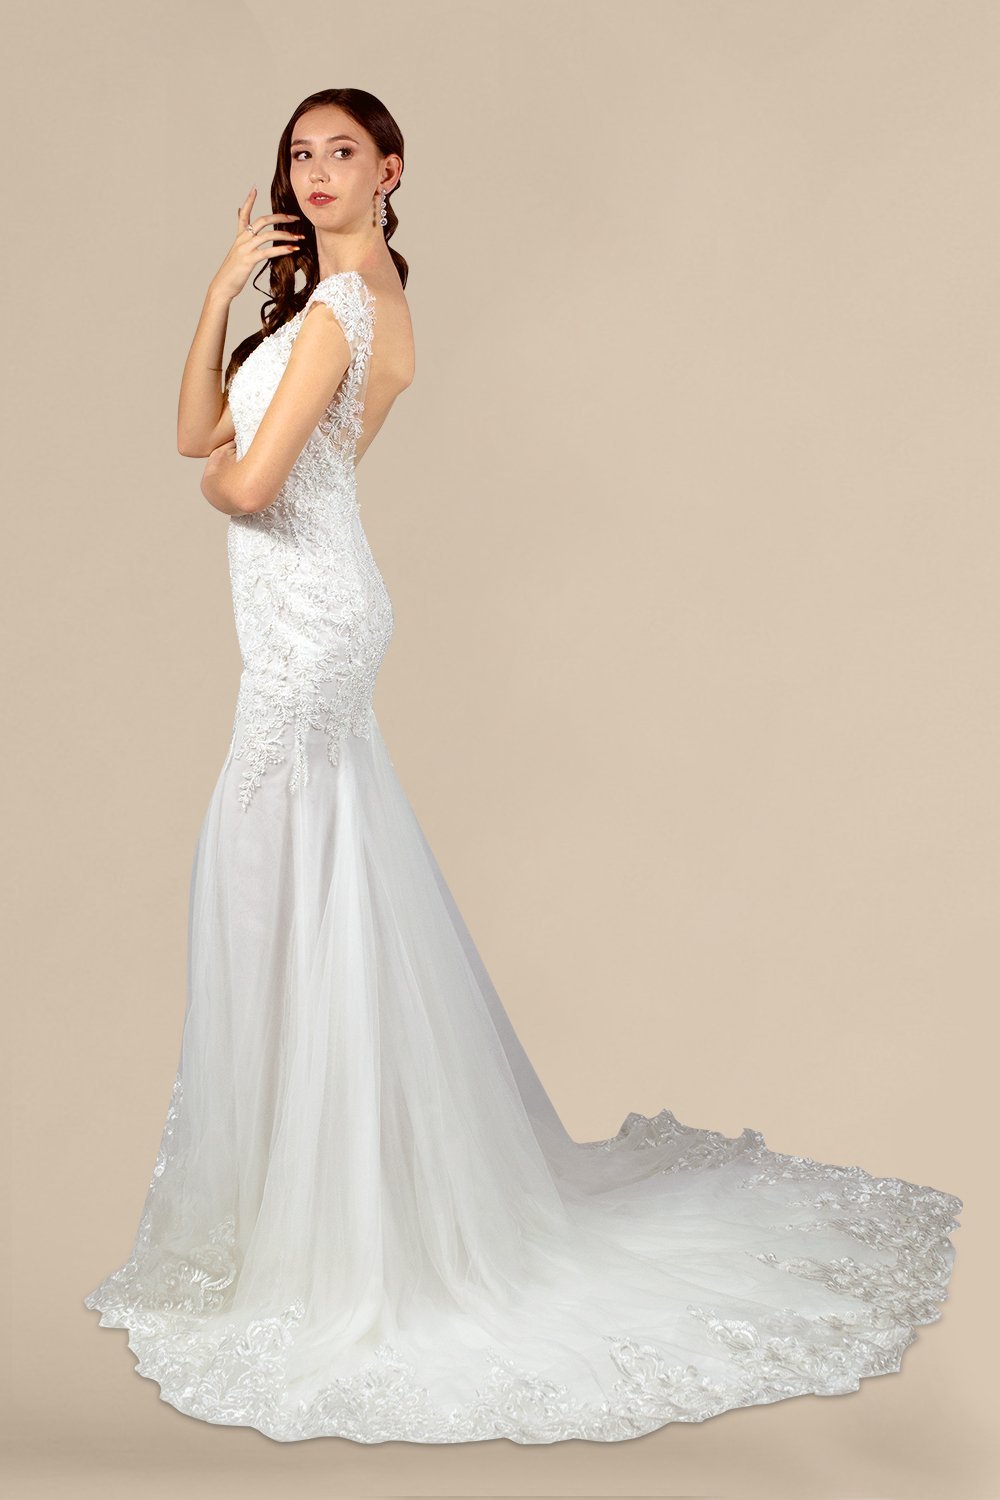 custom made mermaid lace wedding gowns australia online dressmaker envious bridal & formal